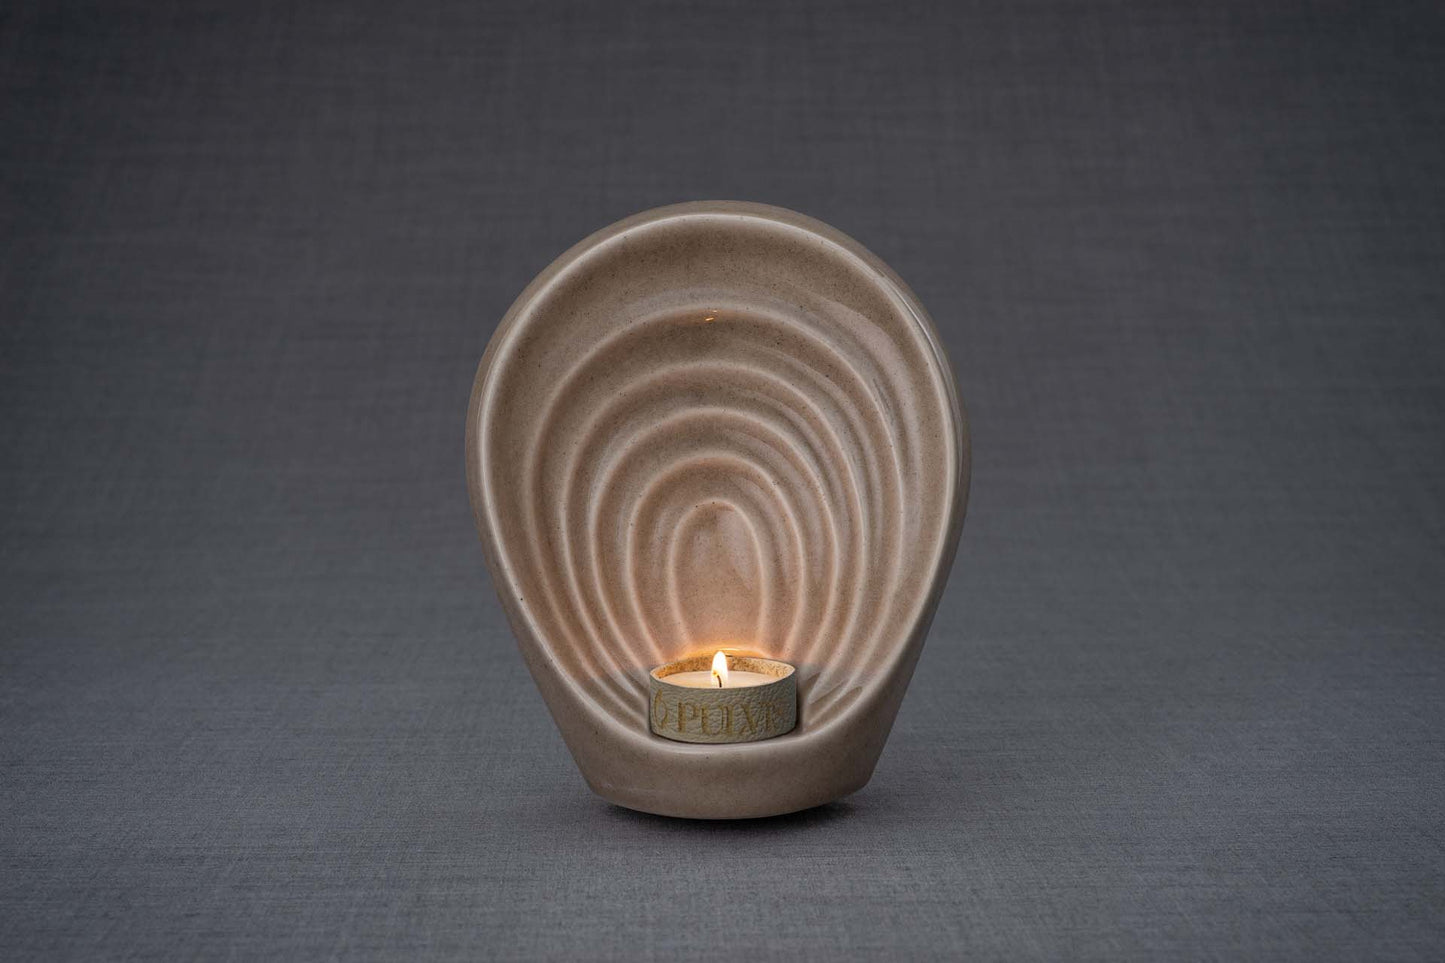 Pulvis Art Urns Keepsake Urn Handmade Cremation Keepsake Urn "Guardian" - Small | Beige Grey | Ceramic